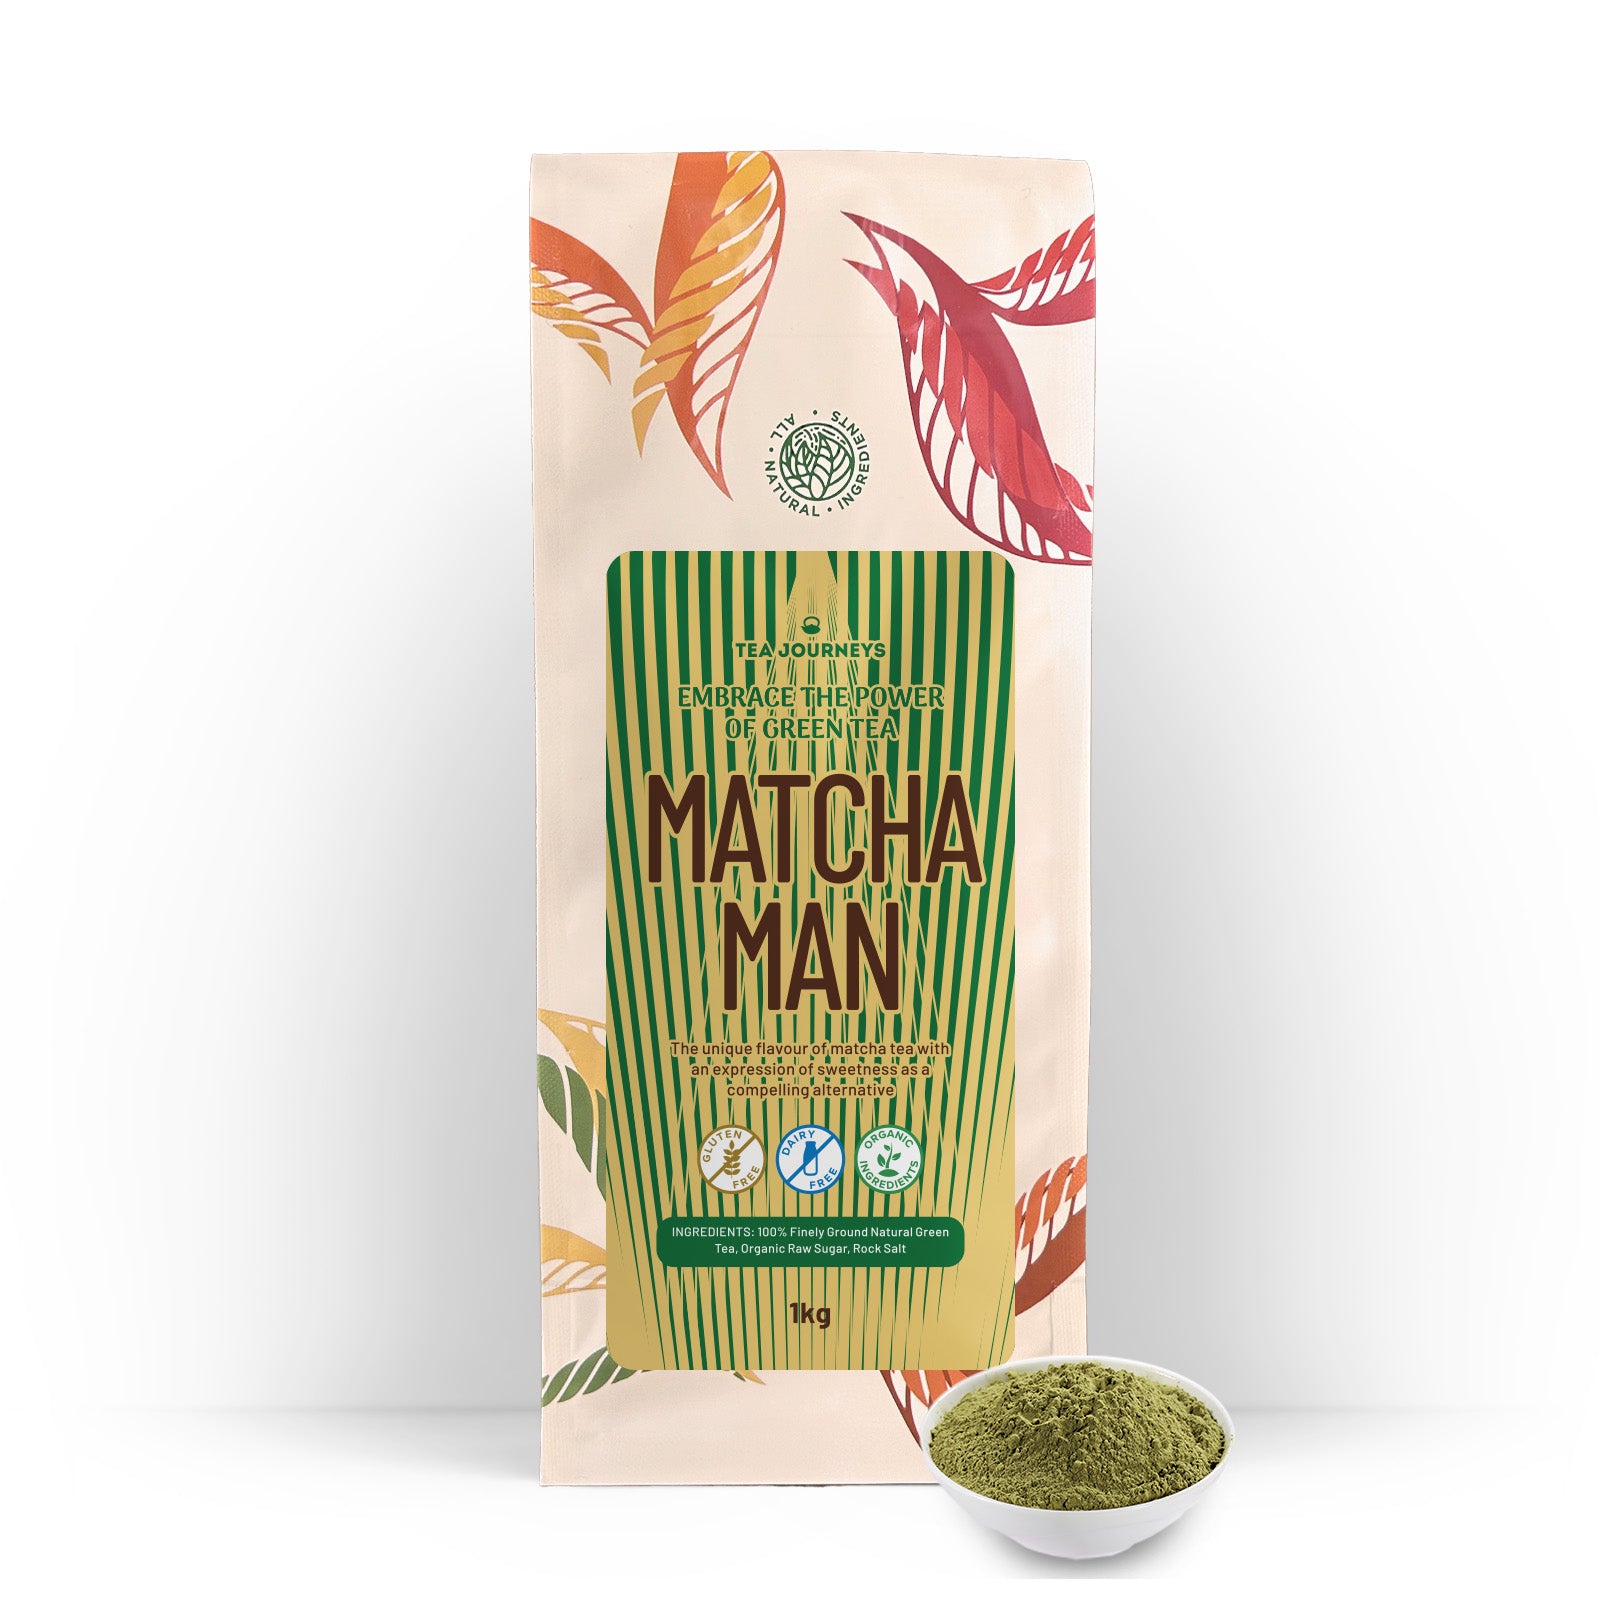 Matcha Man - All Natural Matcha Drinking Powder (Gluten Free, Dairy Free)